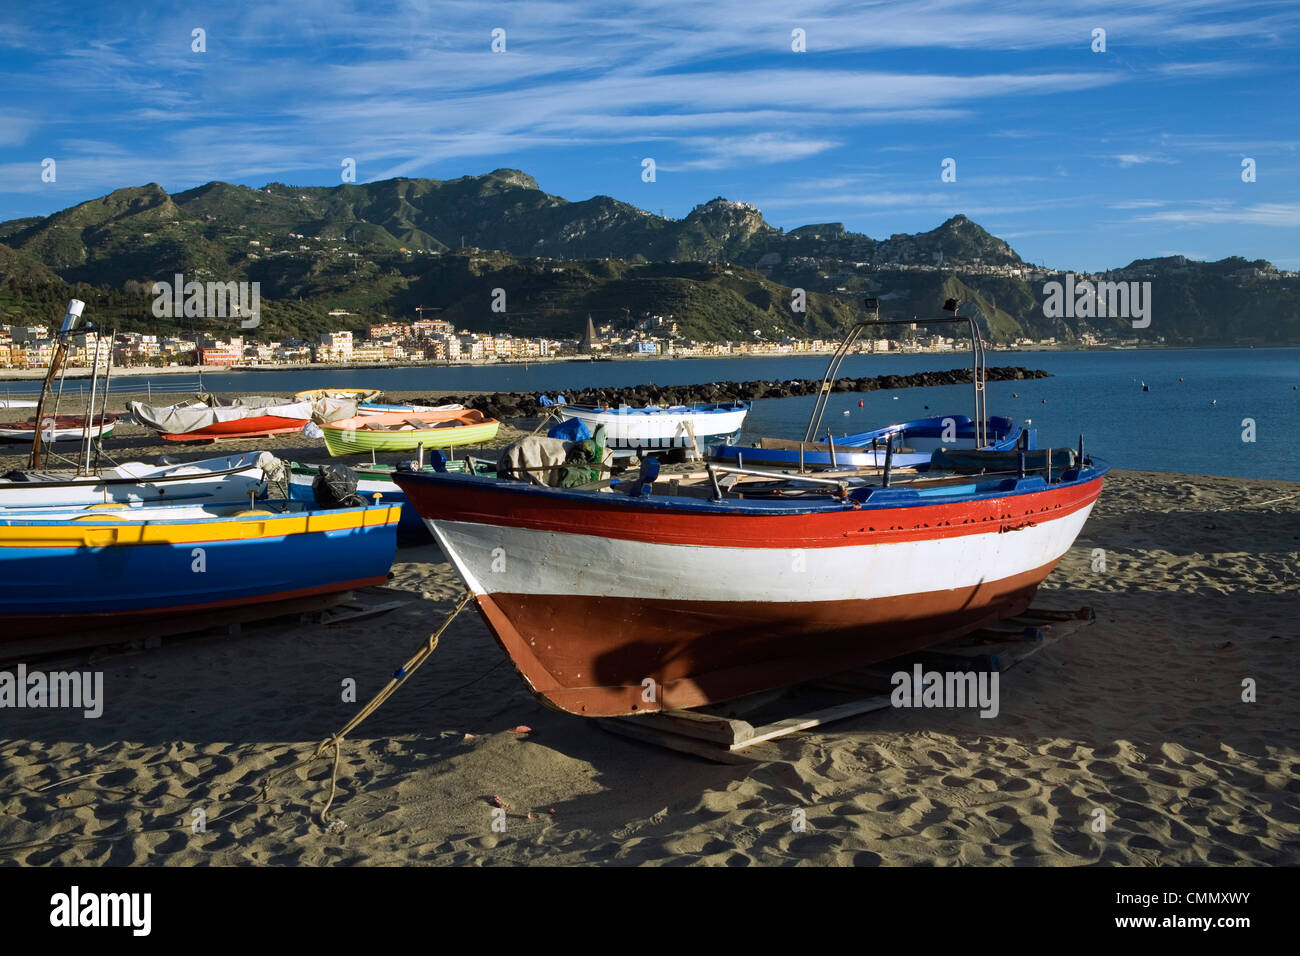 Angelboote/Fischerboote am Strand, Giardini Naxos, Sizilien, Italien, Mittelmeer, Europa Stockfoto